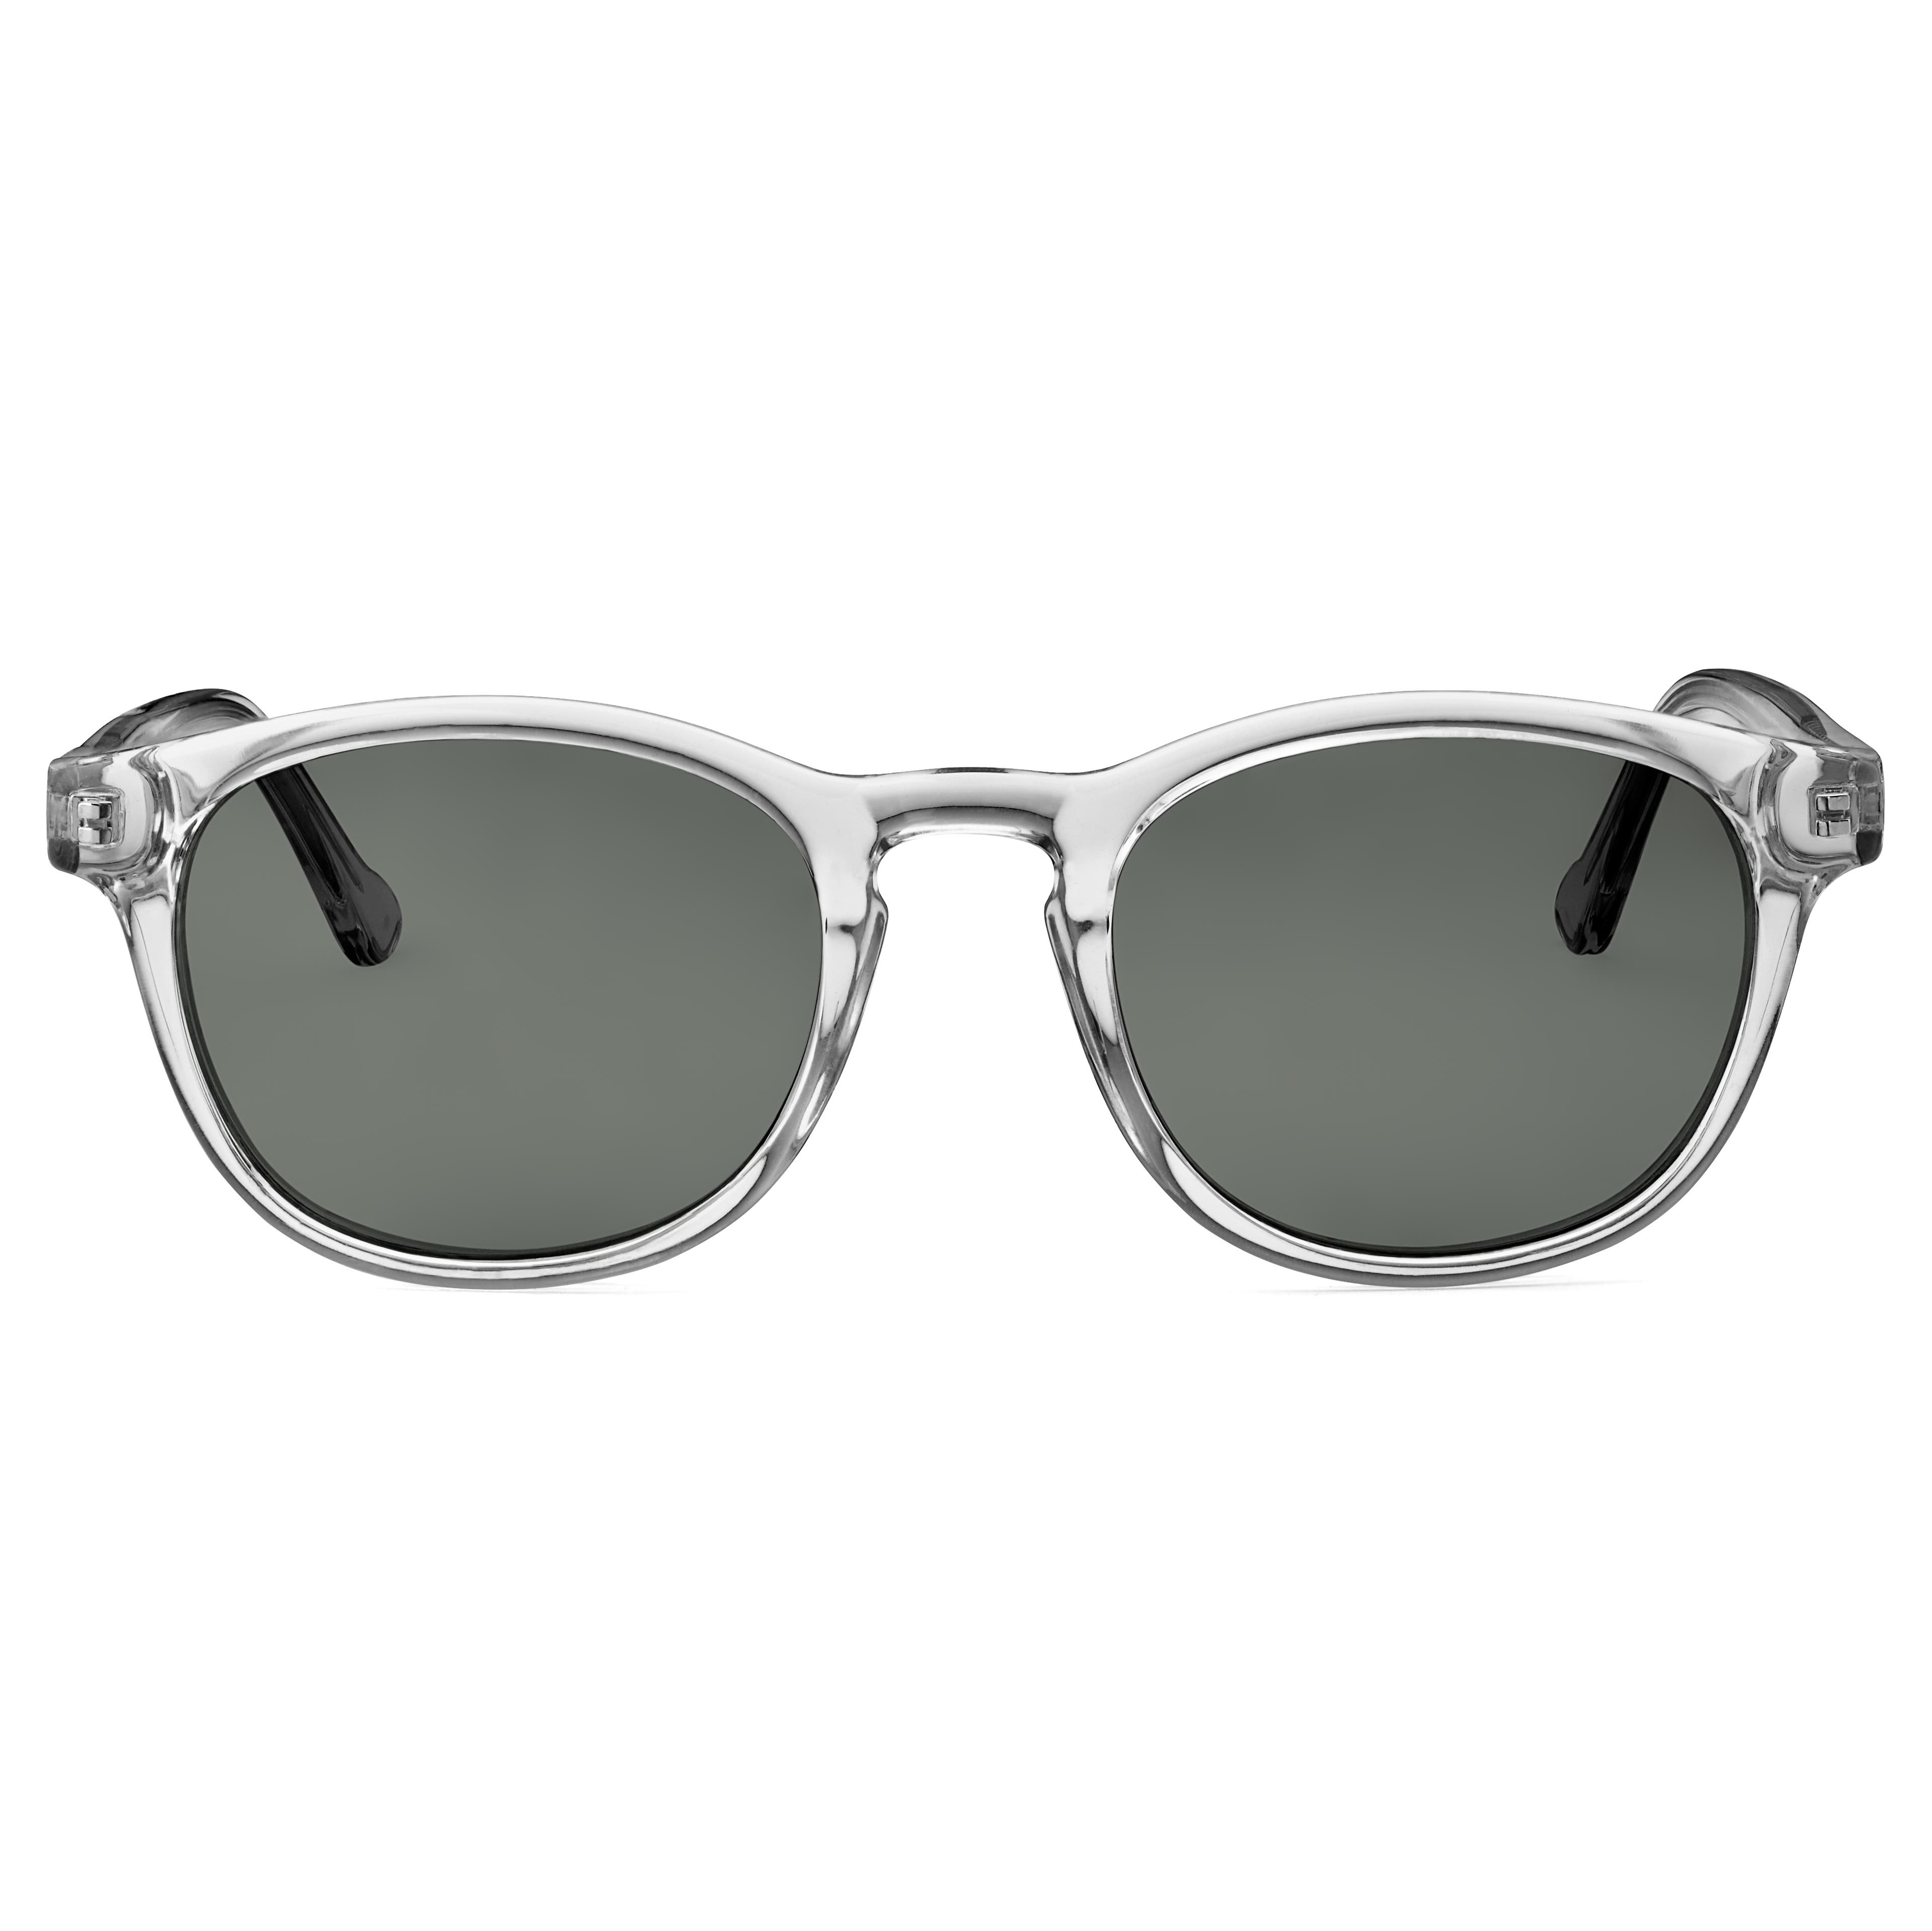 Grey PU Leather Hard Shell Glasses Case